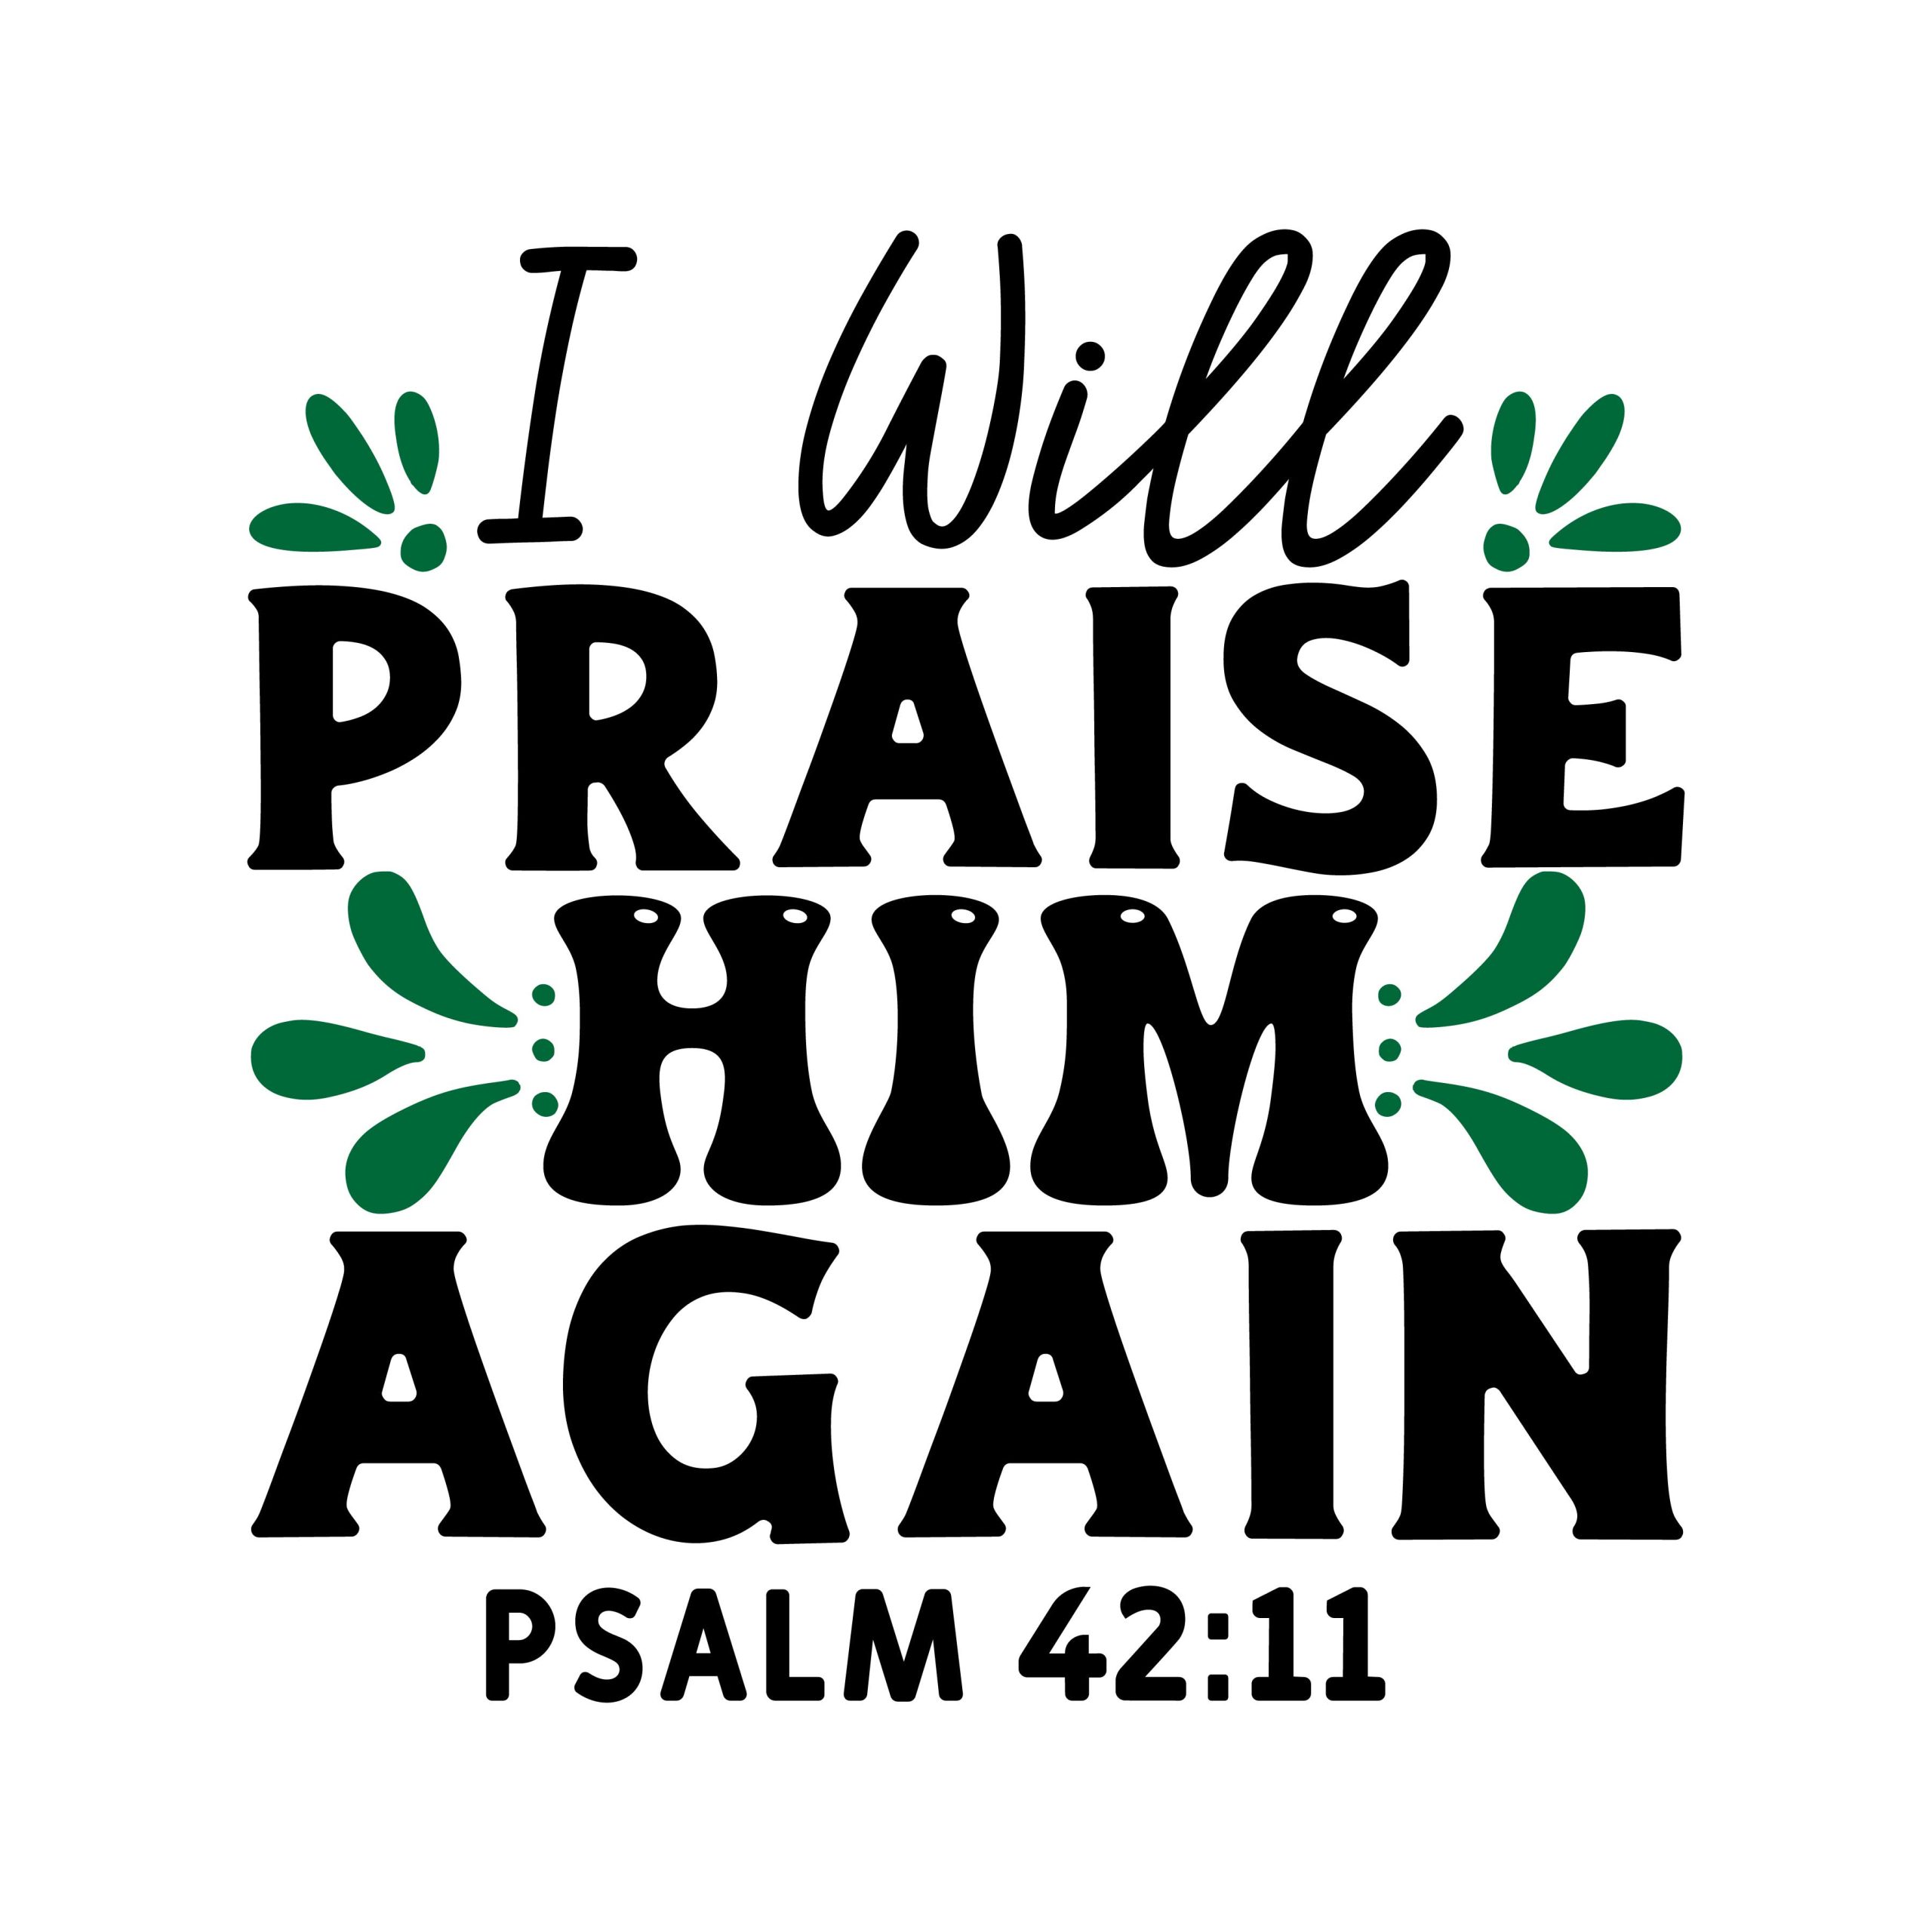 I will praise him again psalm 42:11, bible verses, scripture verses, svg files, passages, sayings, cricut designs, silhouette, embroidery, bundle, free cut files, design space, vector